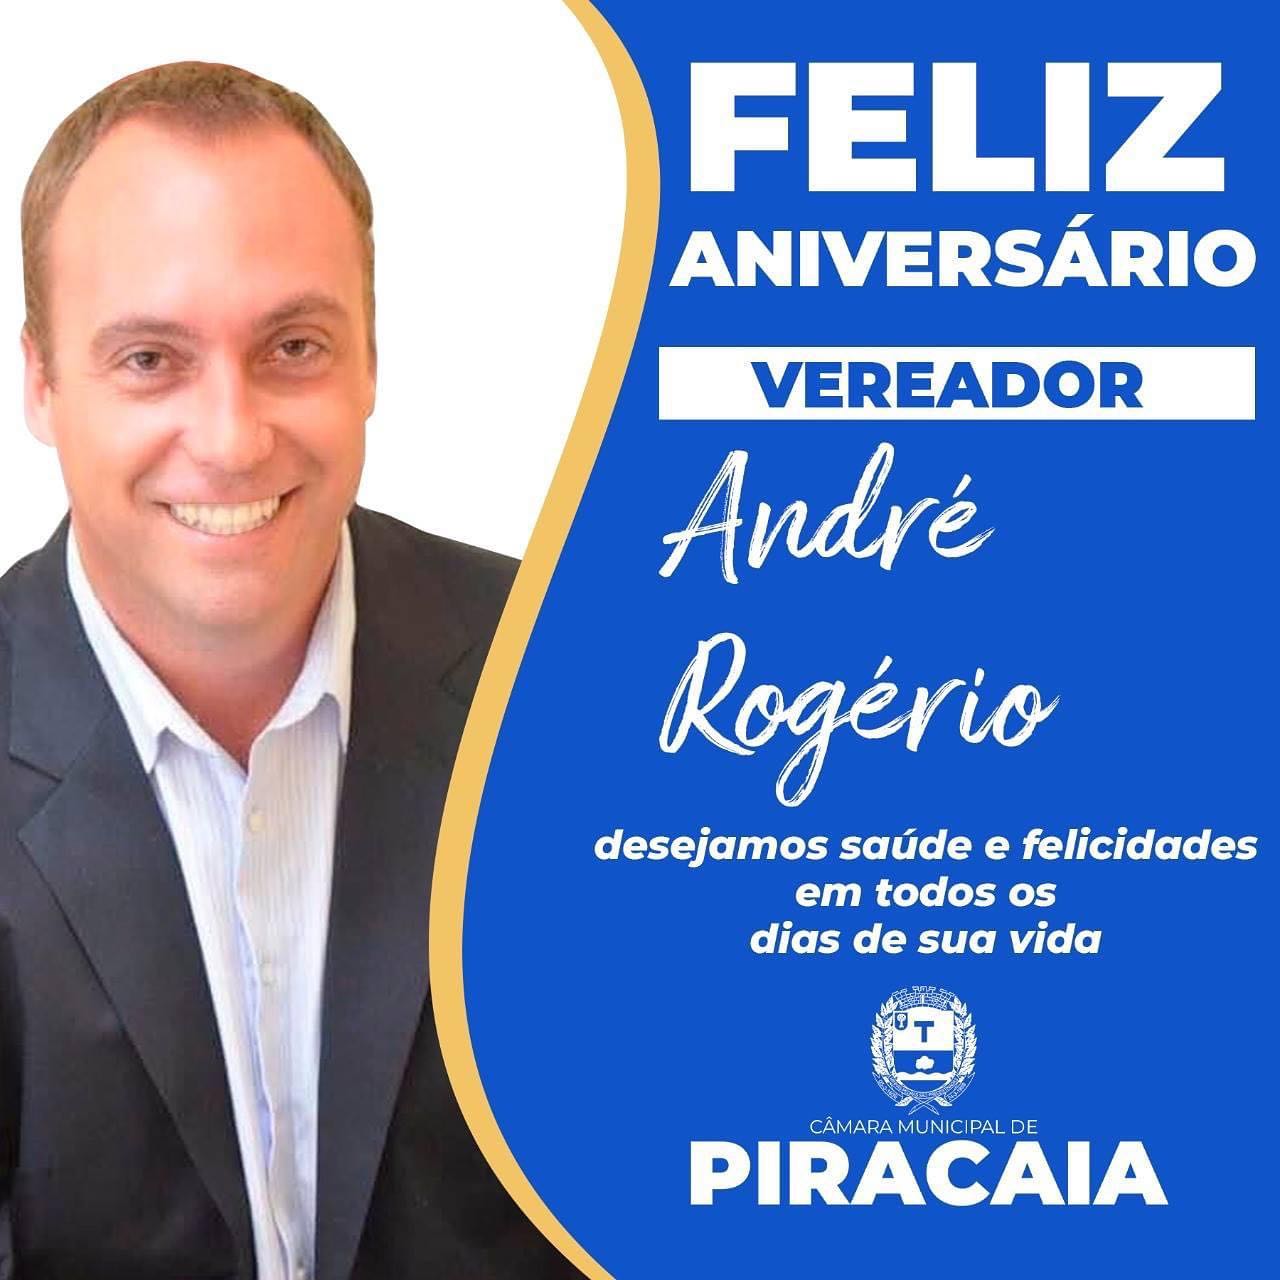 Feliz aniversário Vereador André Rogério